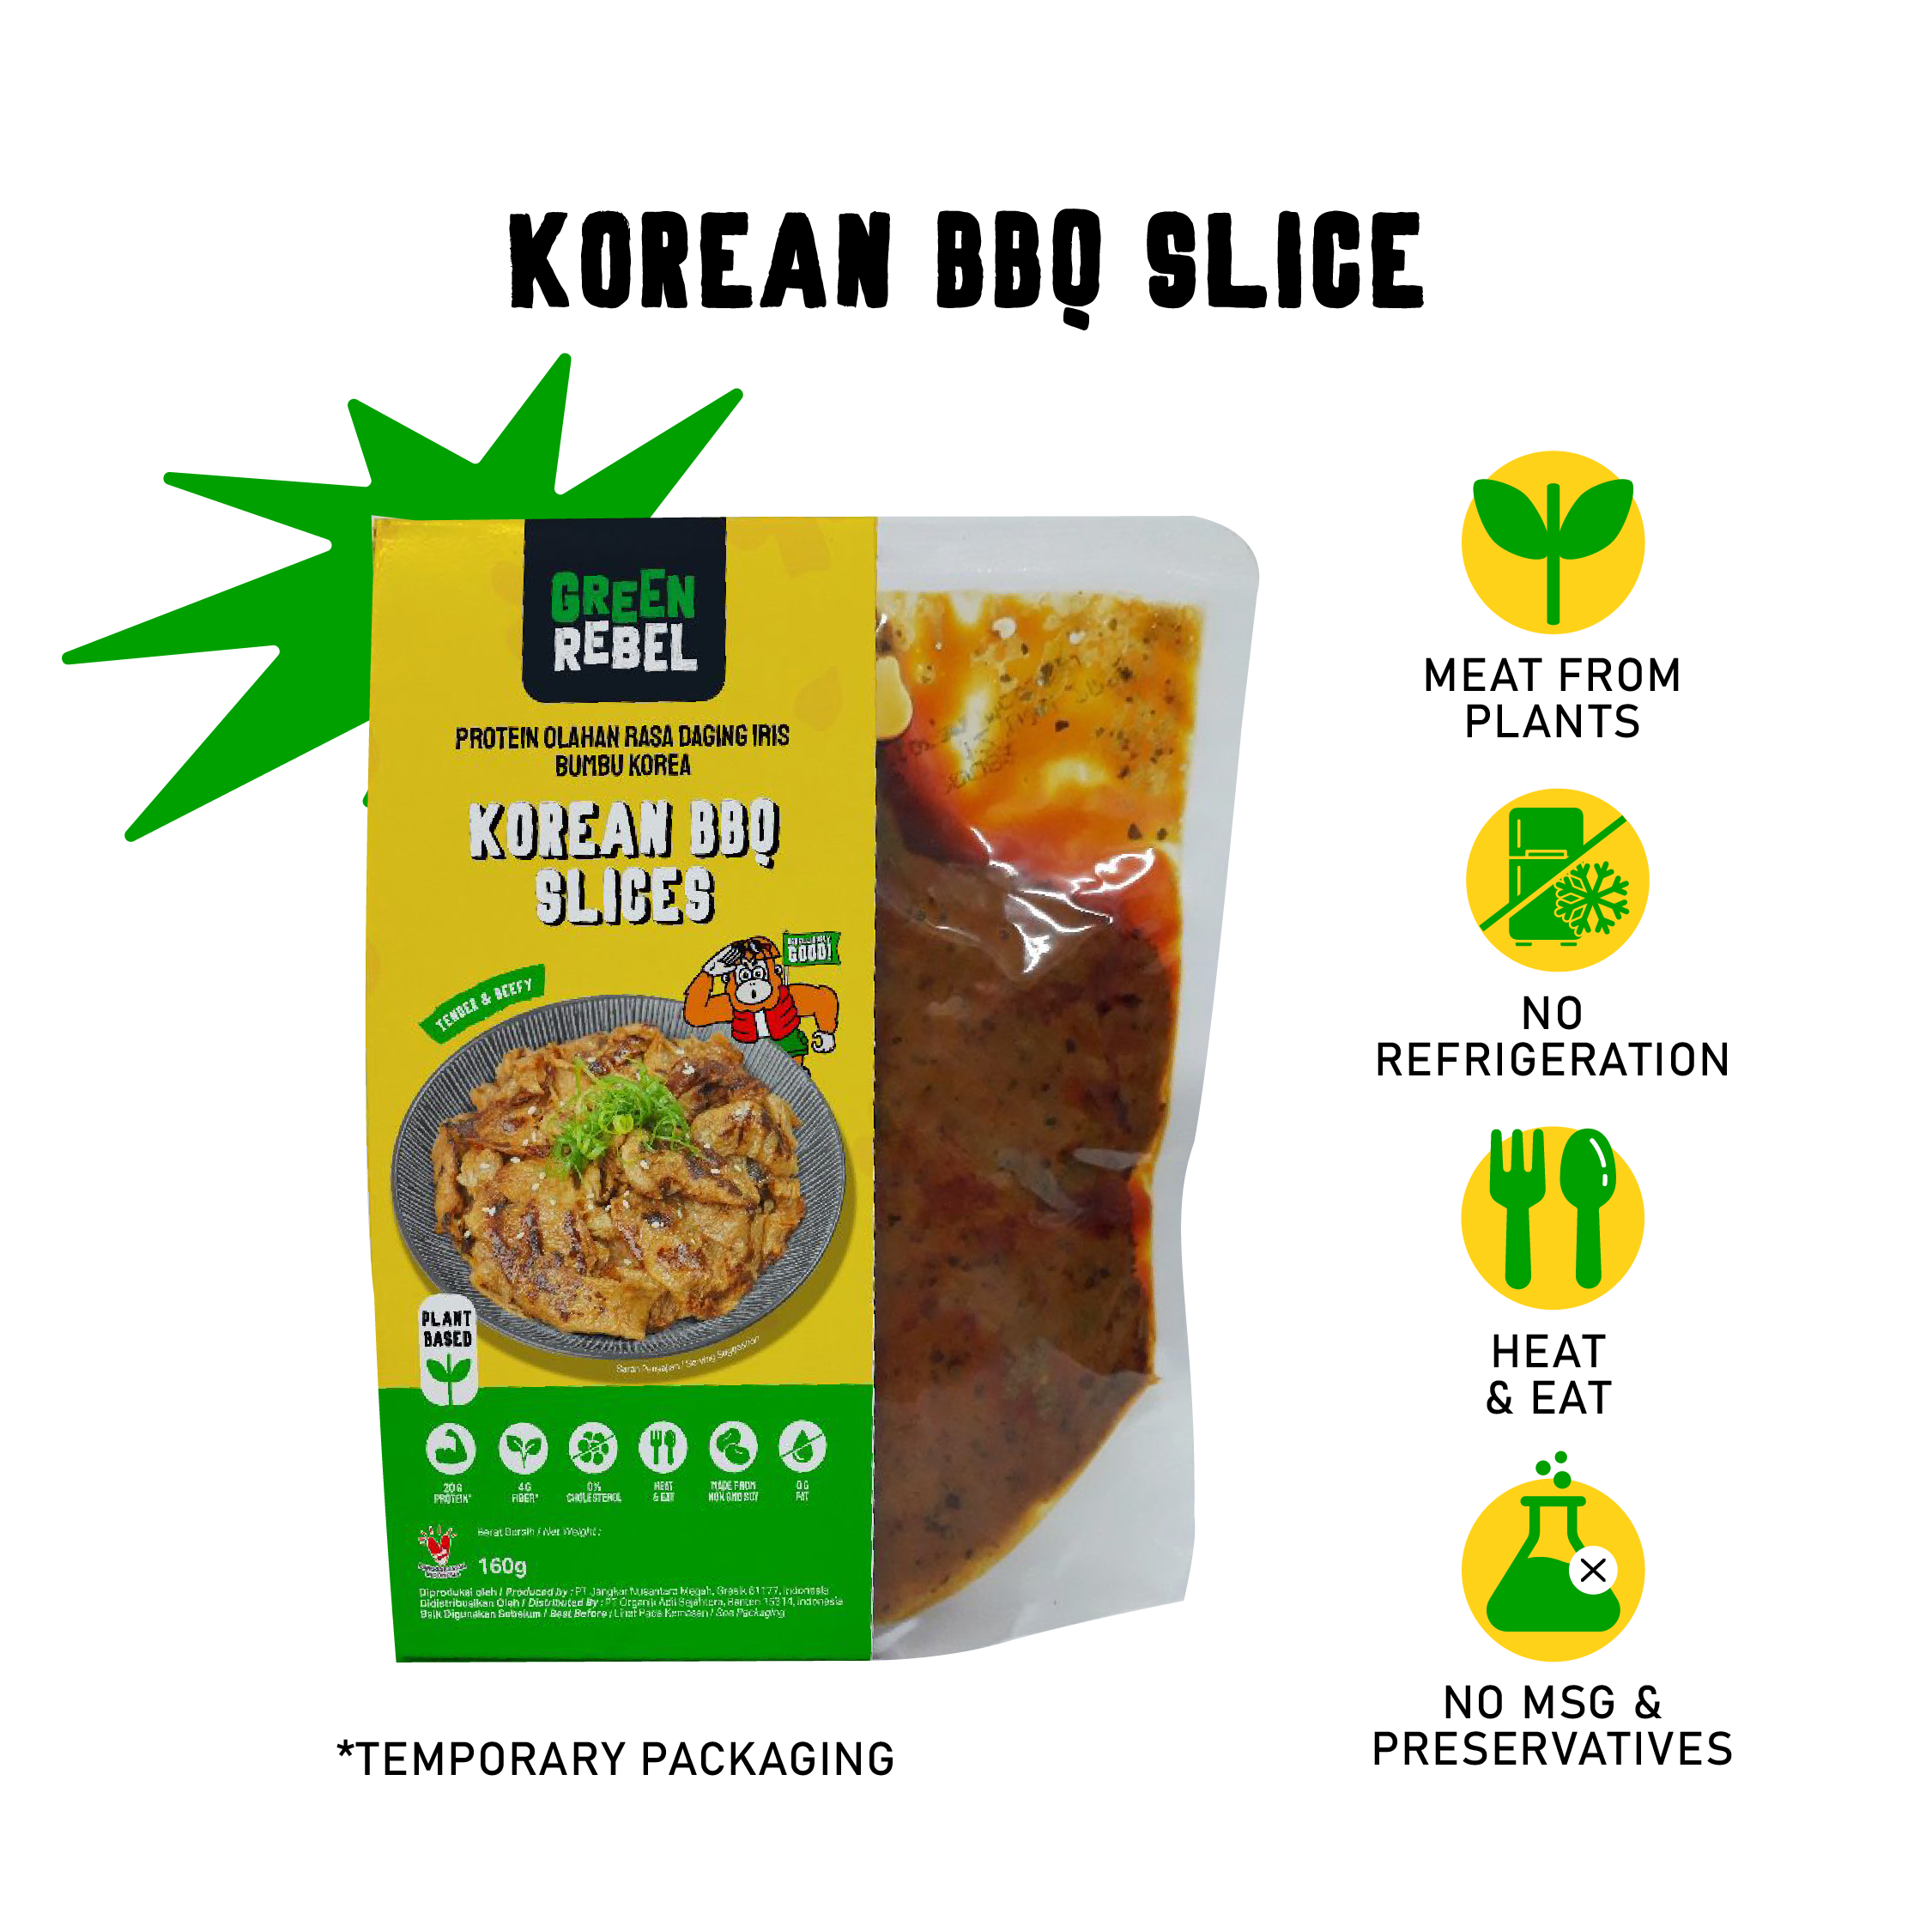 Korean BBQ Slice